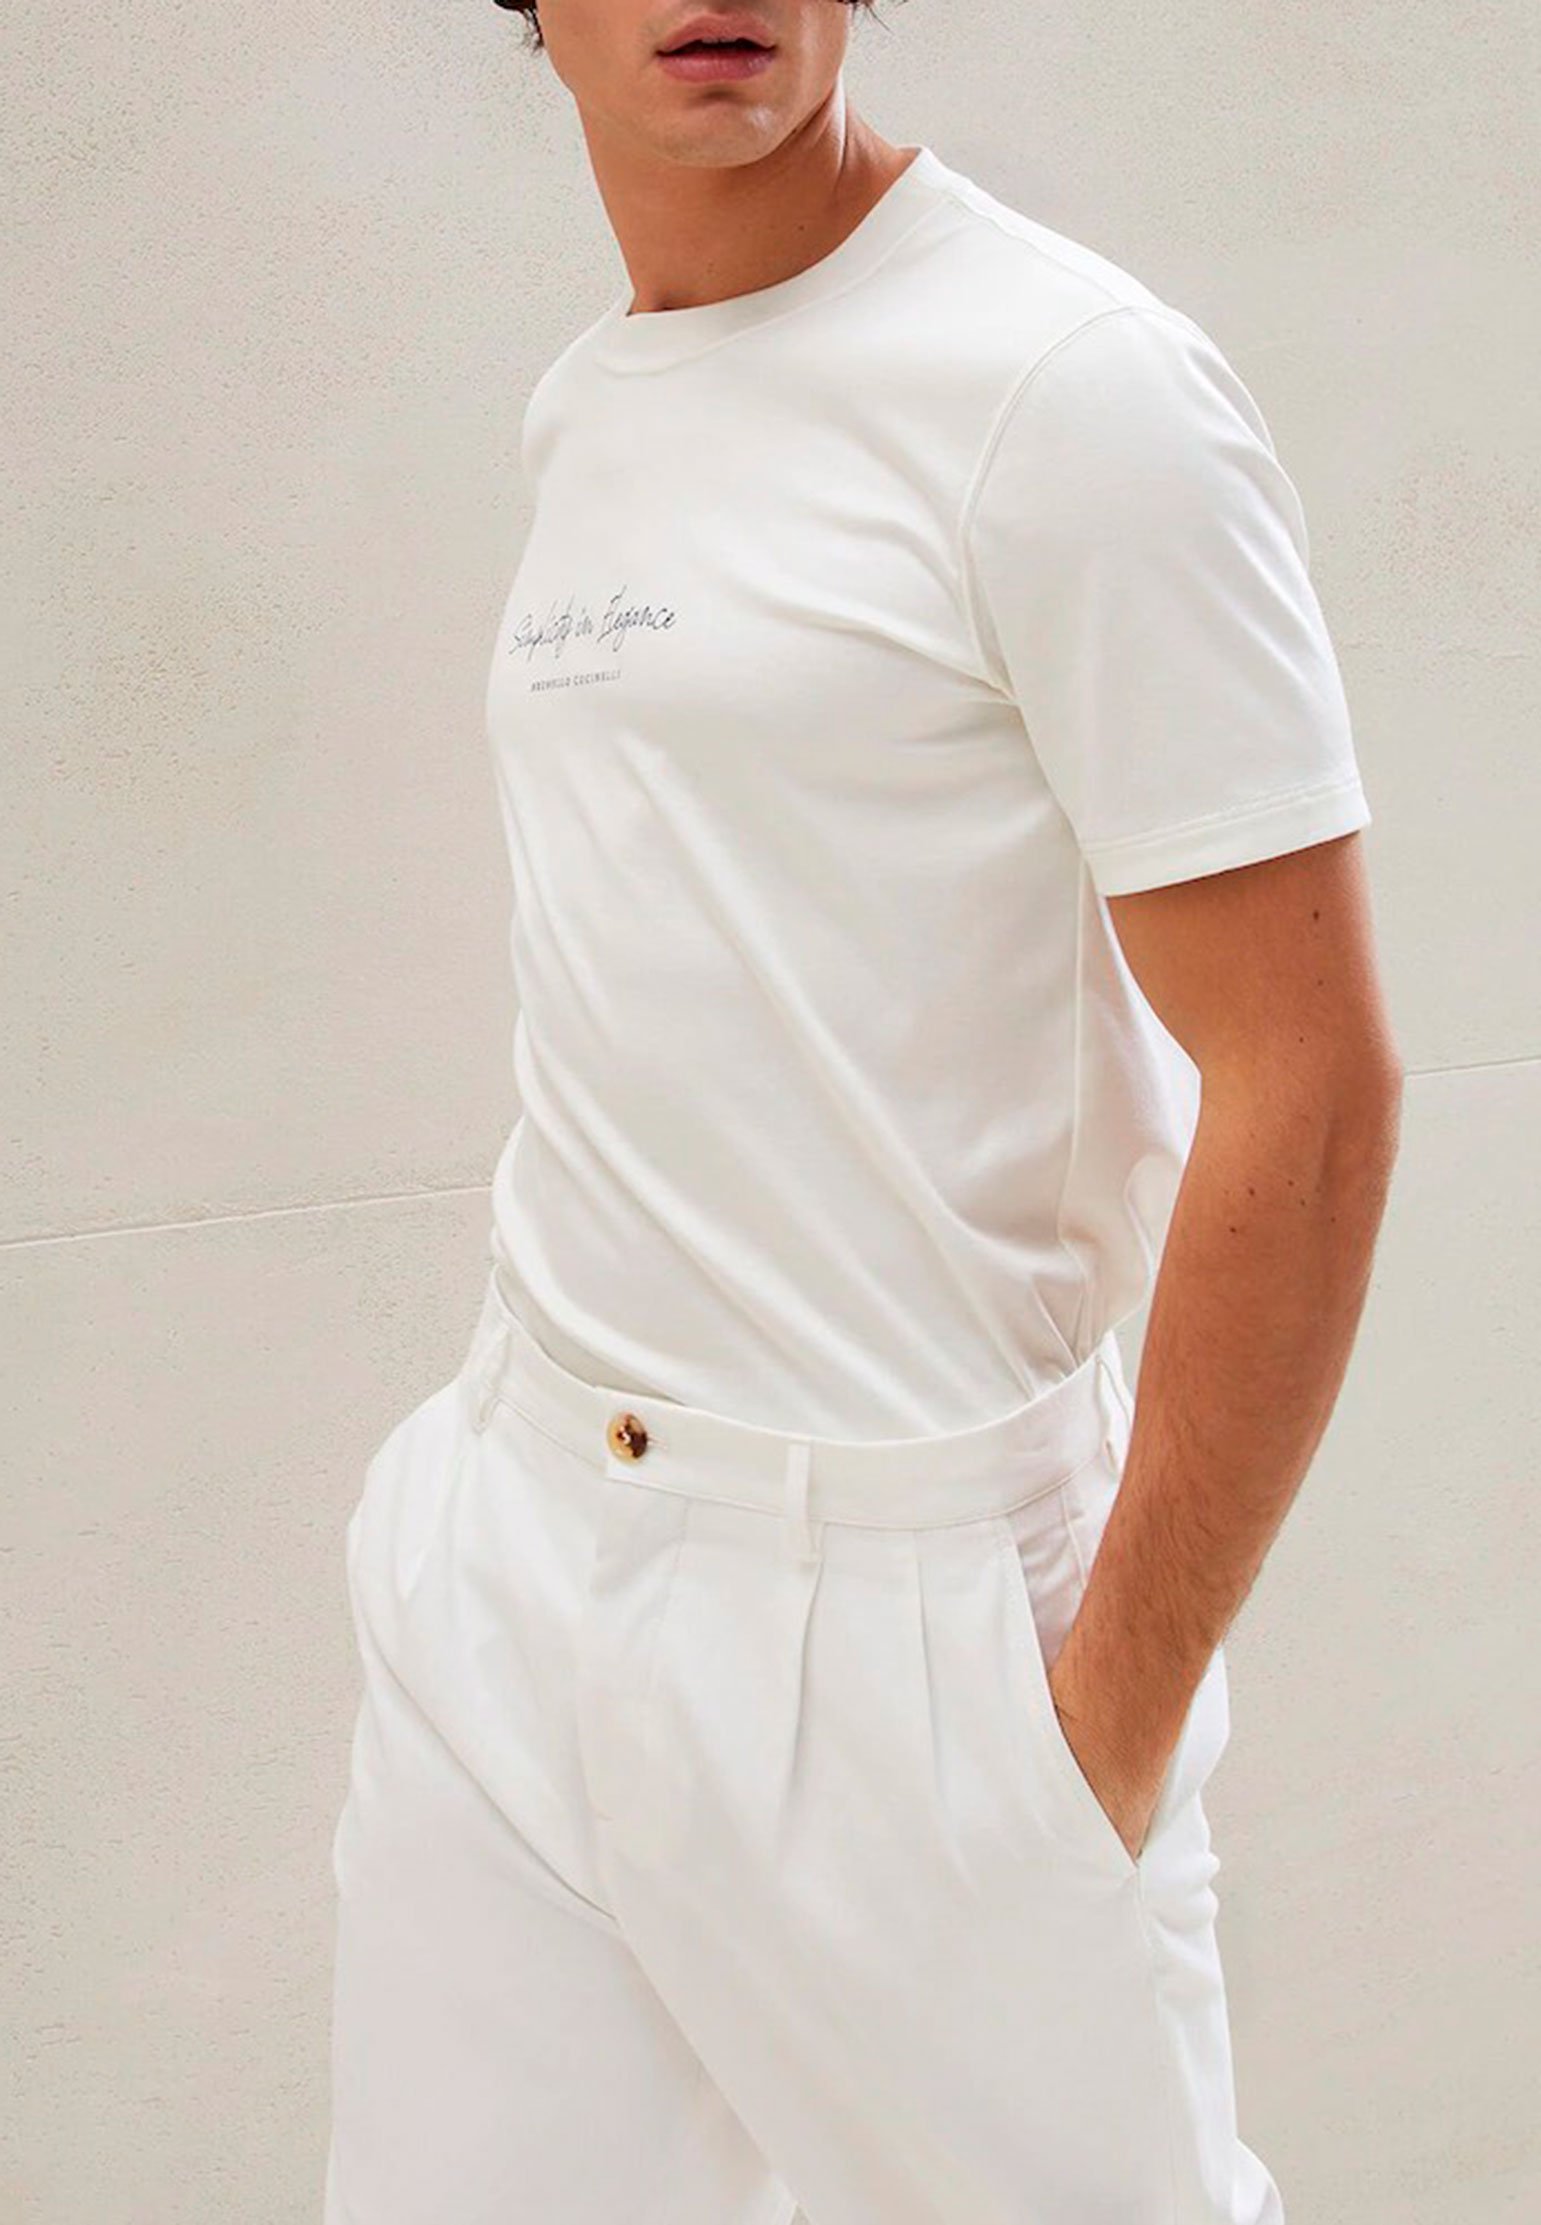 T-Shirt BRUNELLO CUCINELLI Color: white (Code: 716) in online store Allure